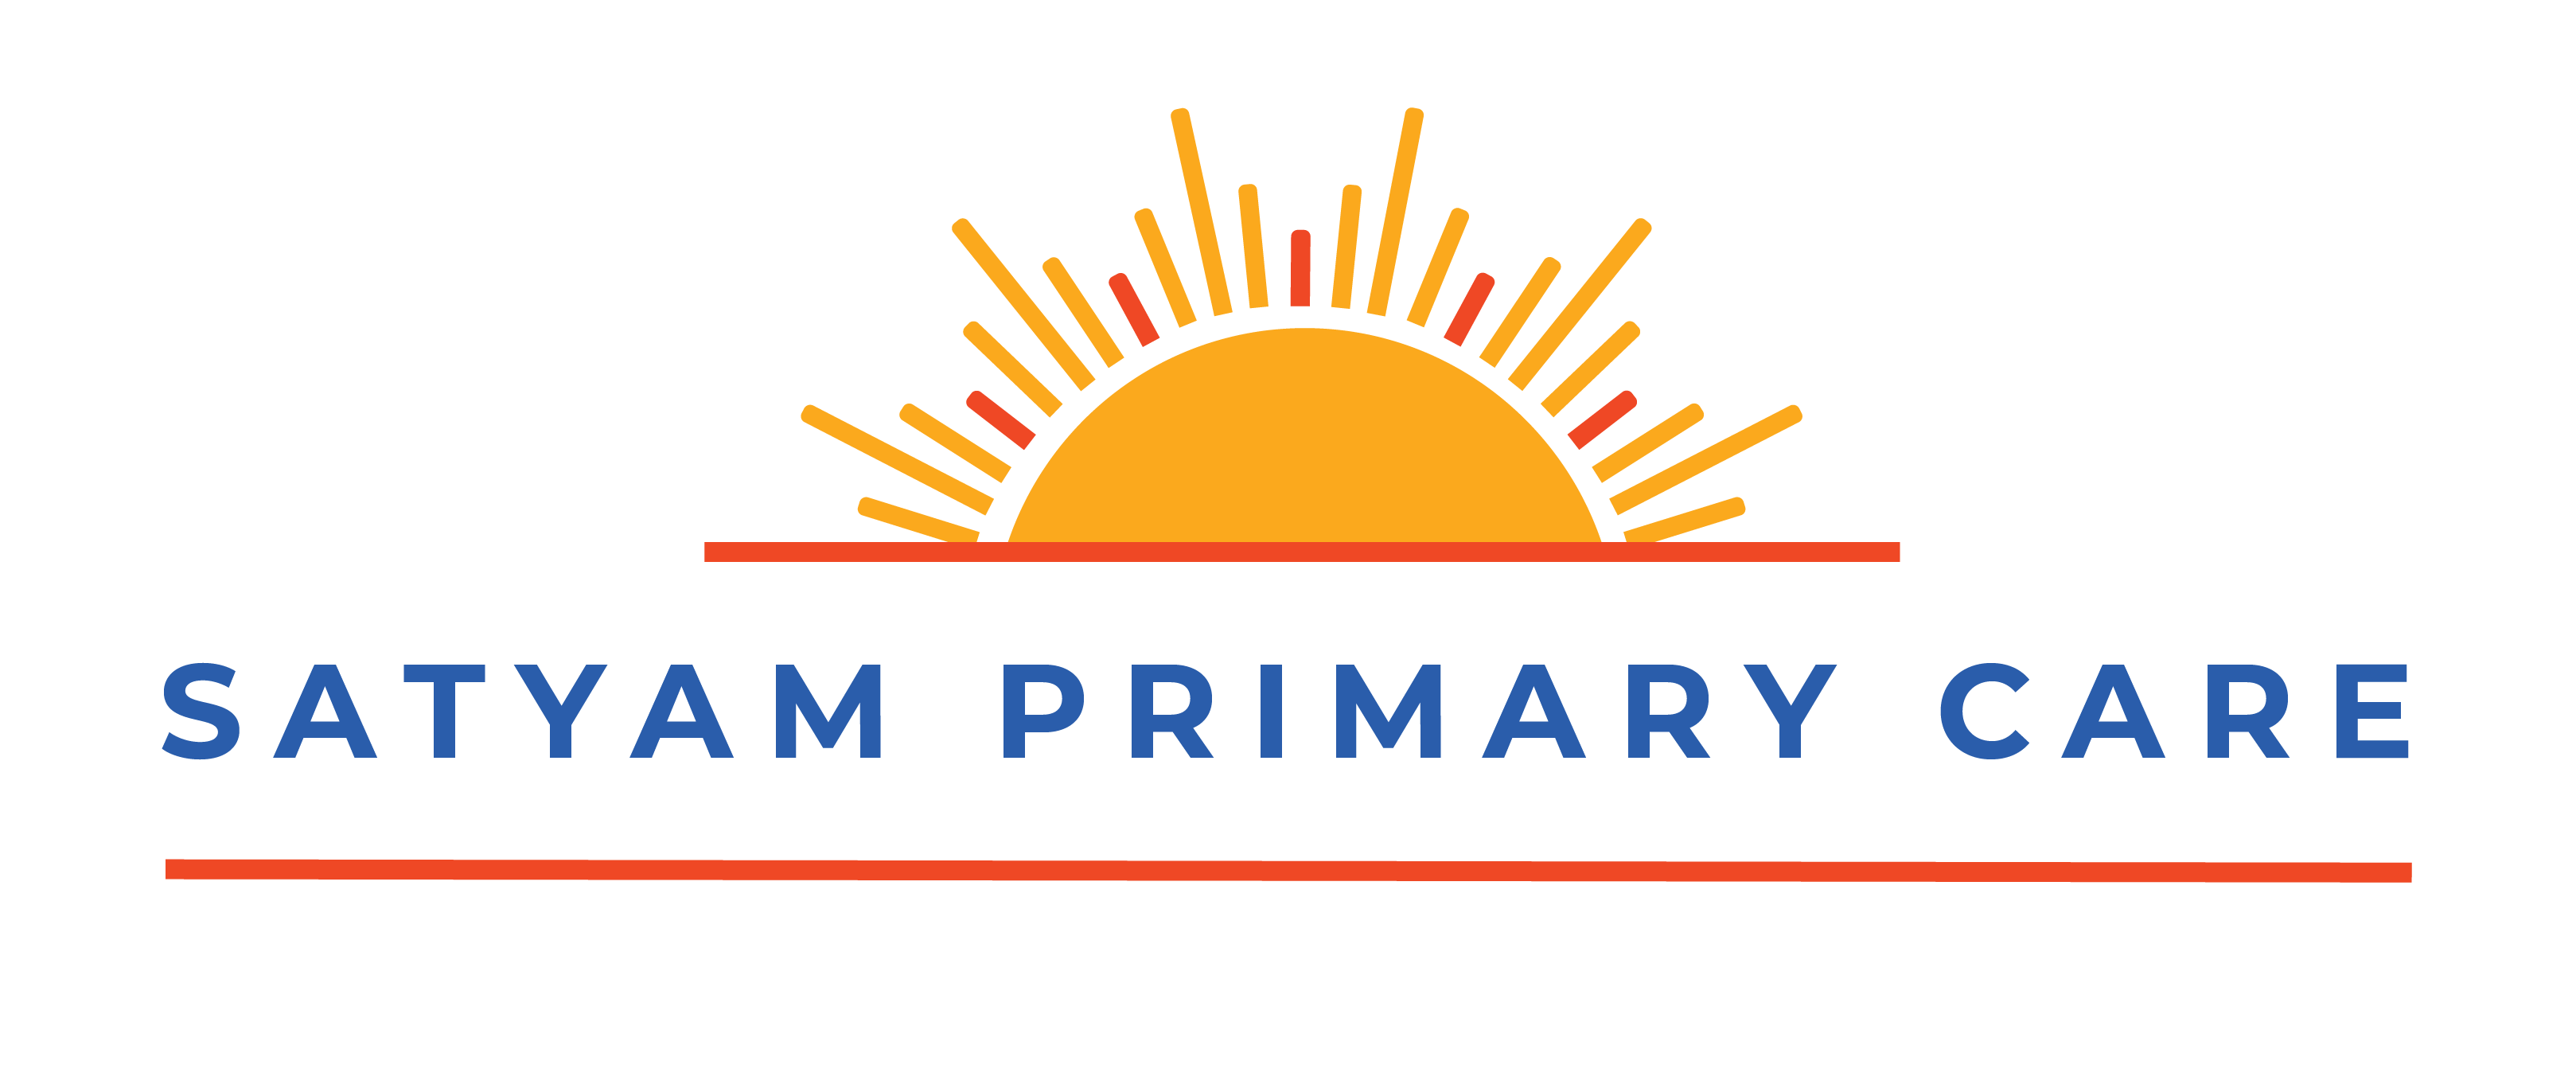 Business logo of Satyam Primary Care